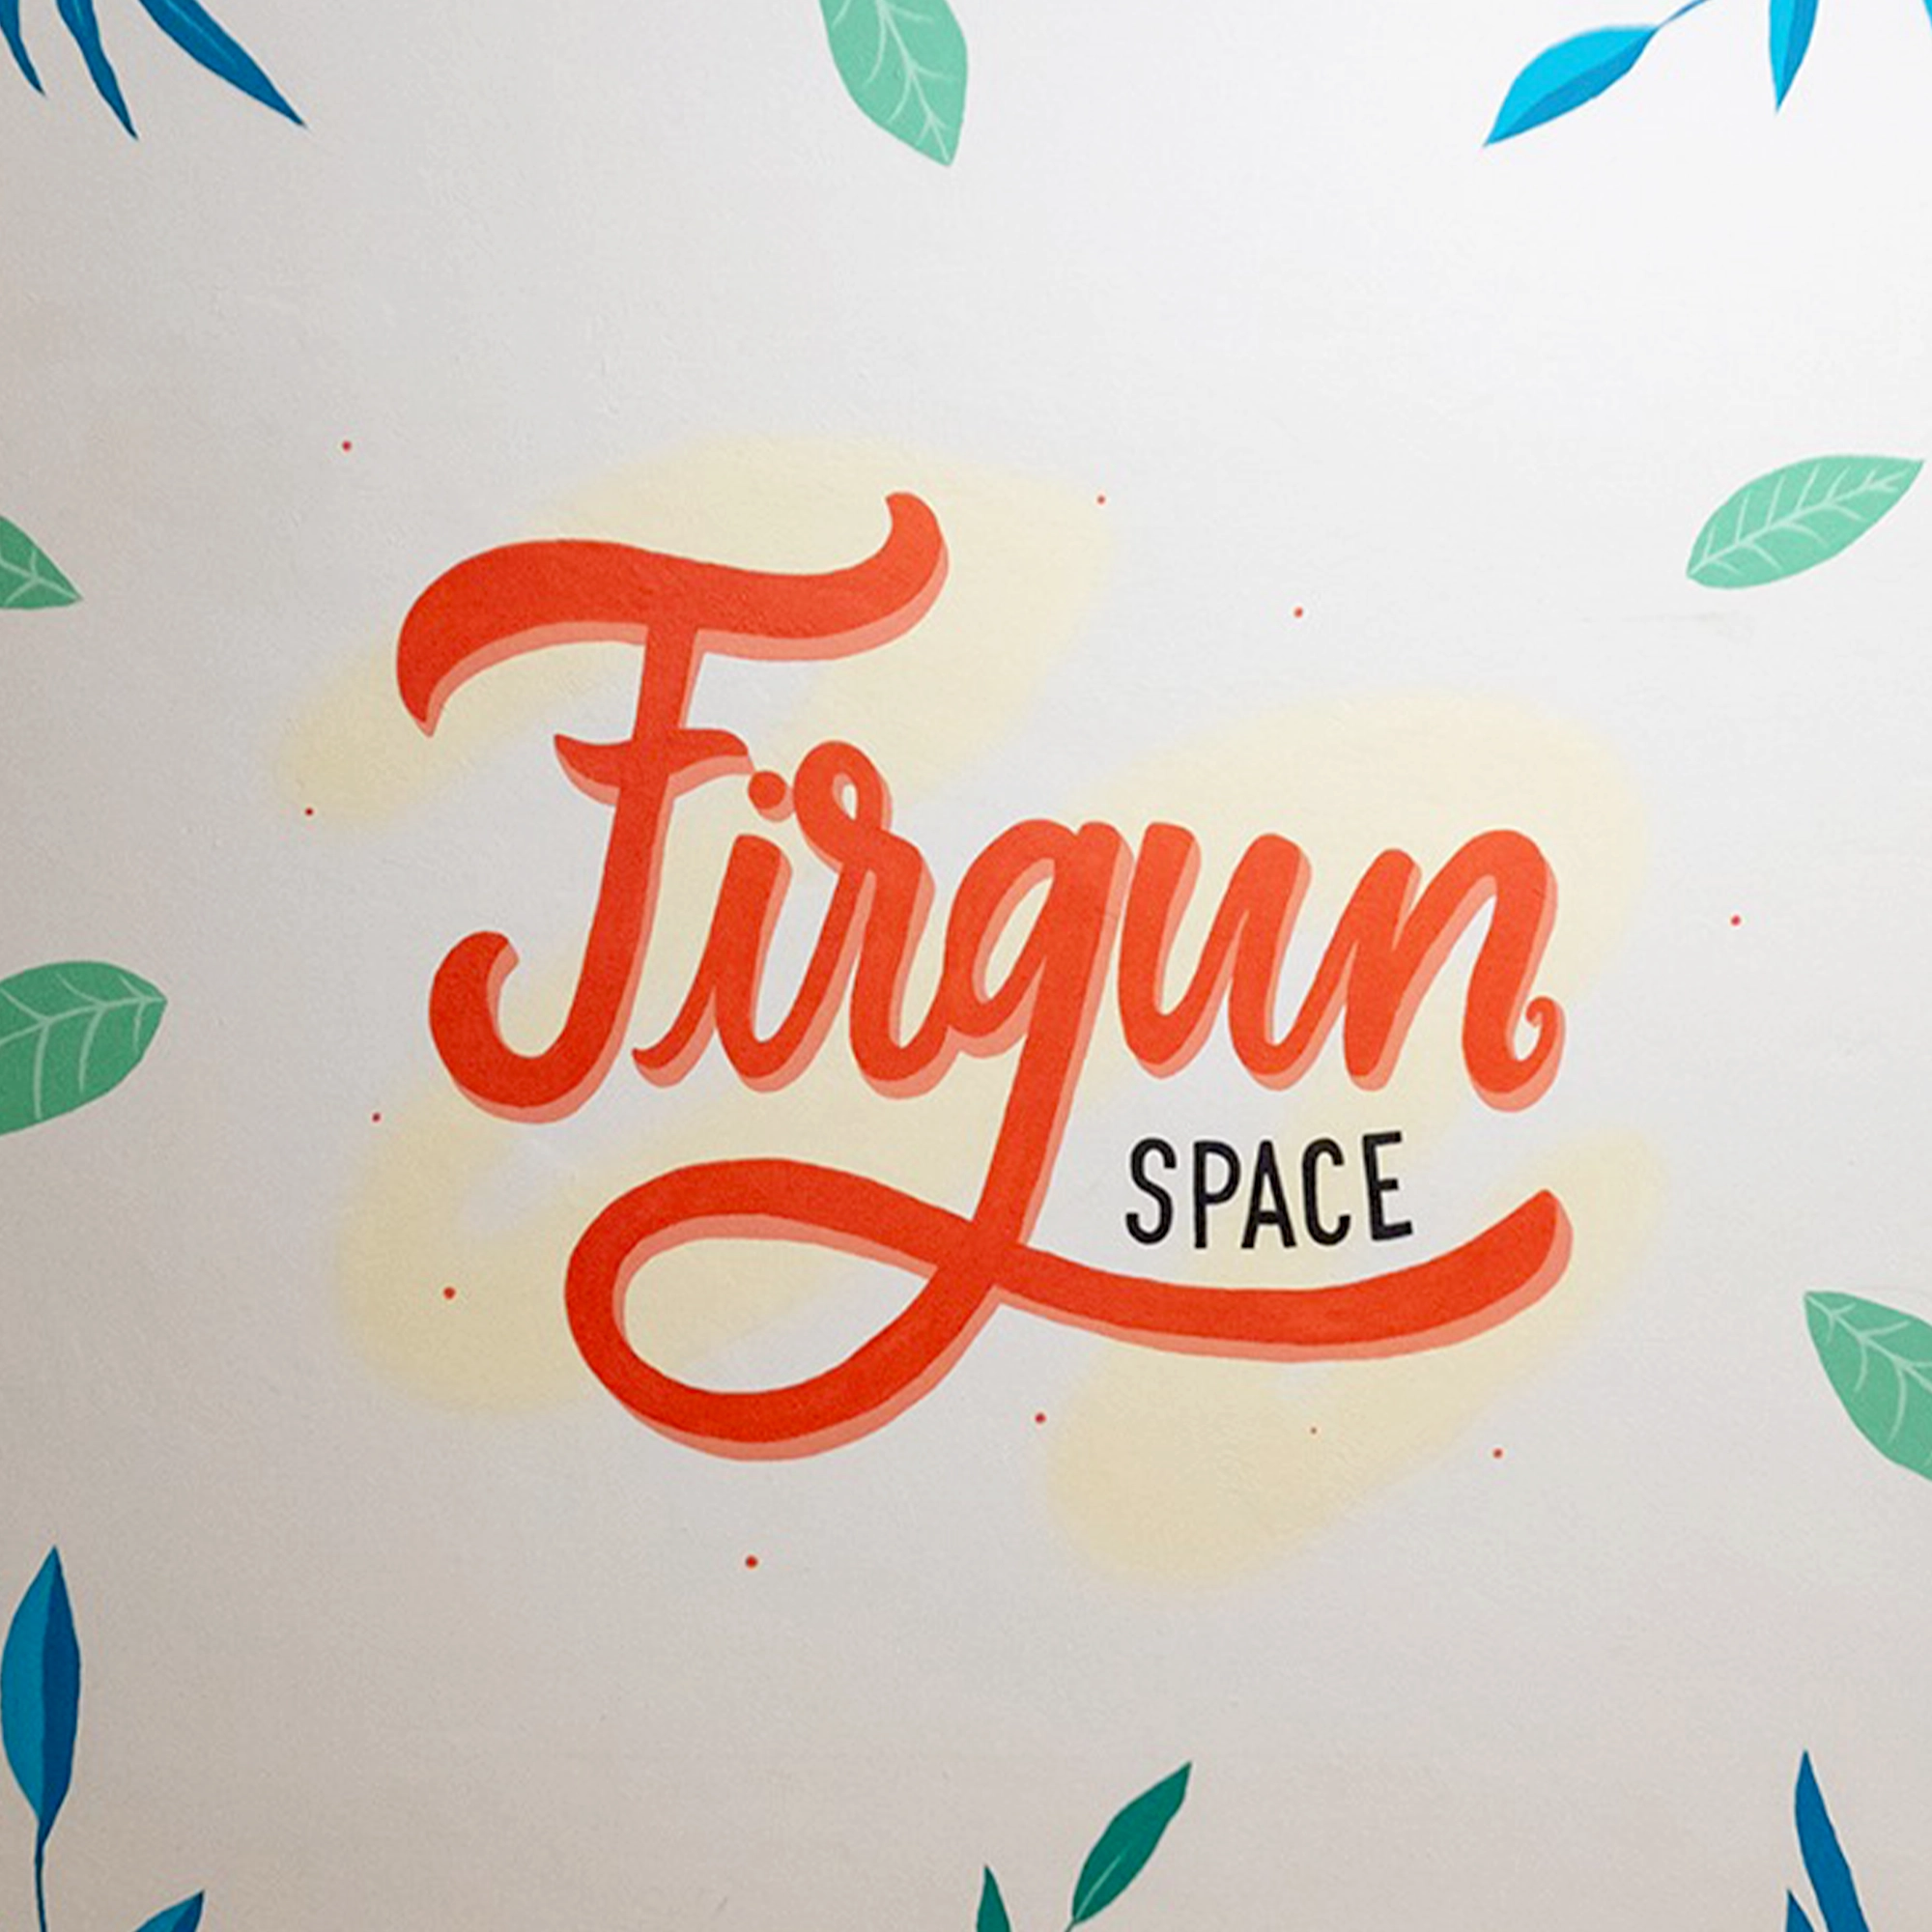 Firgun Space Office Mural